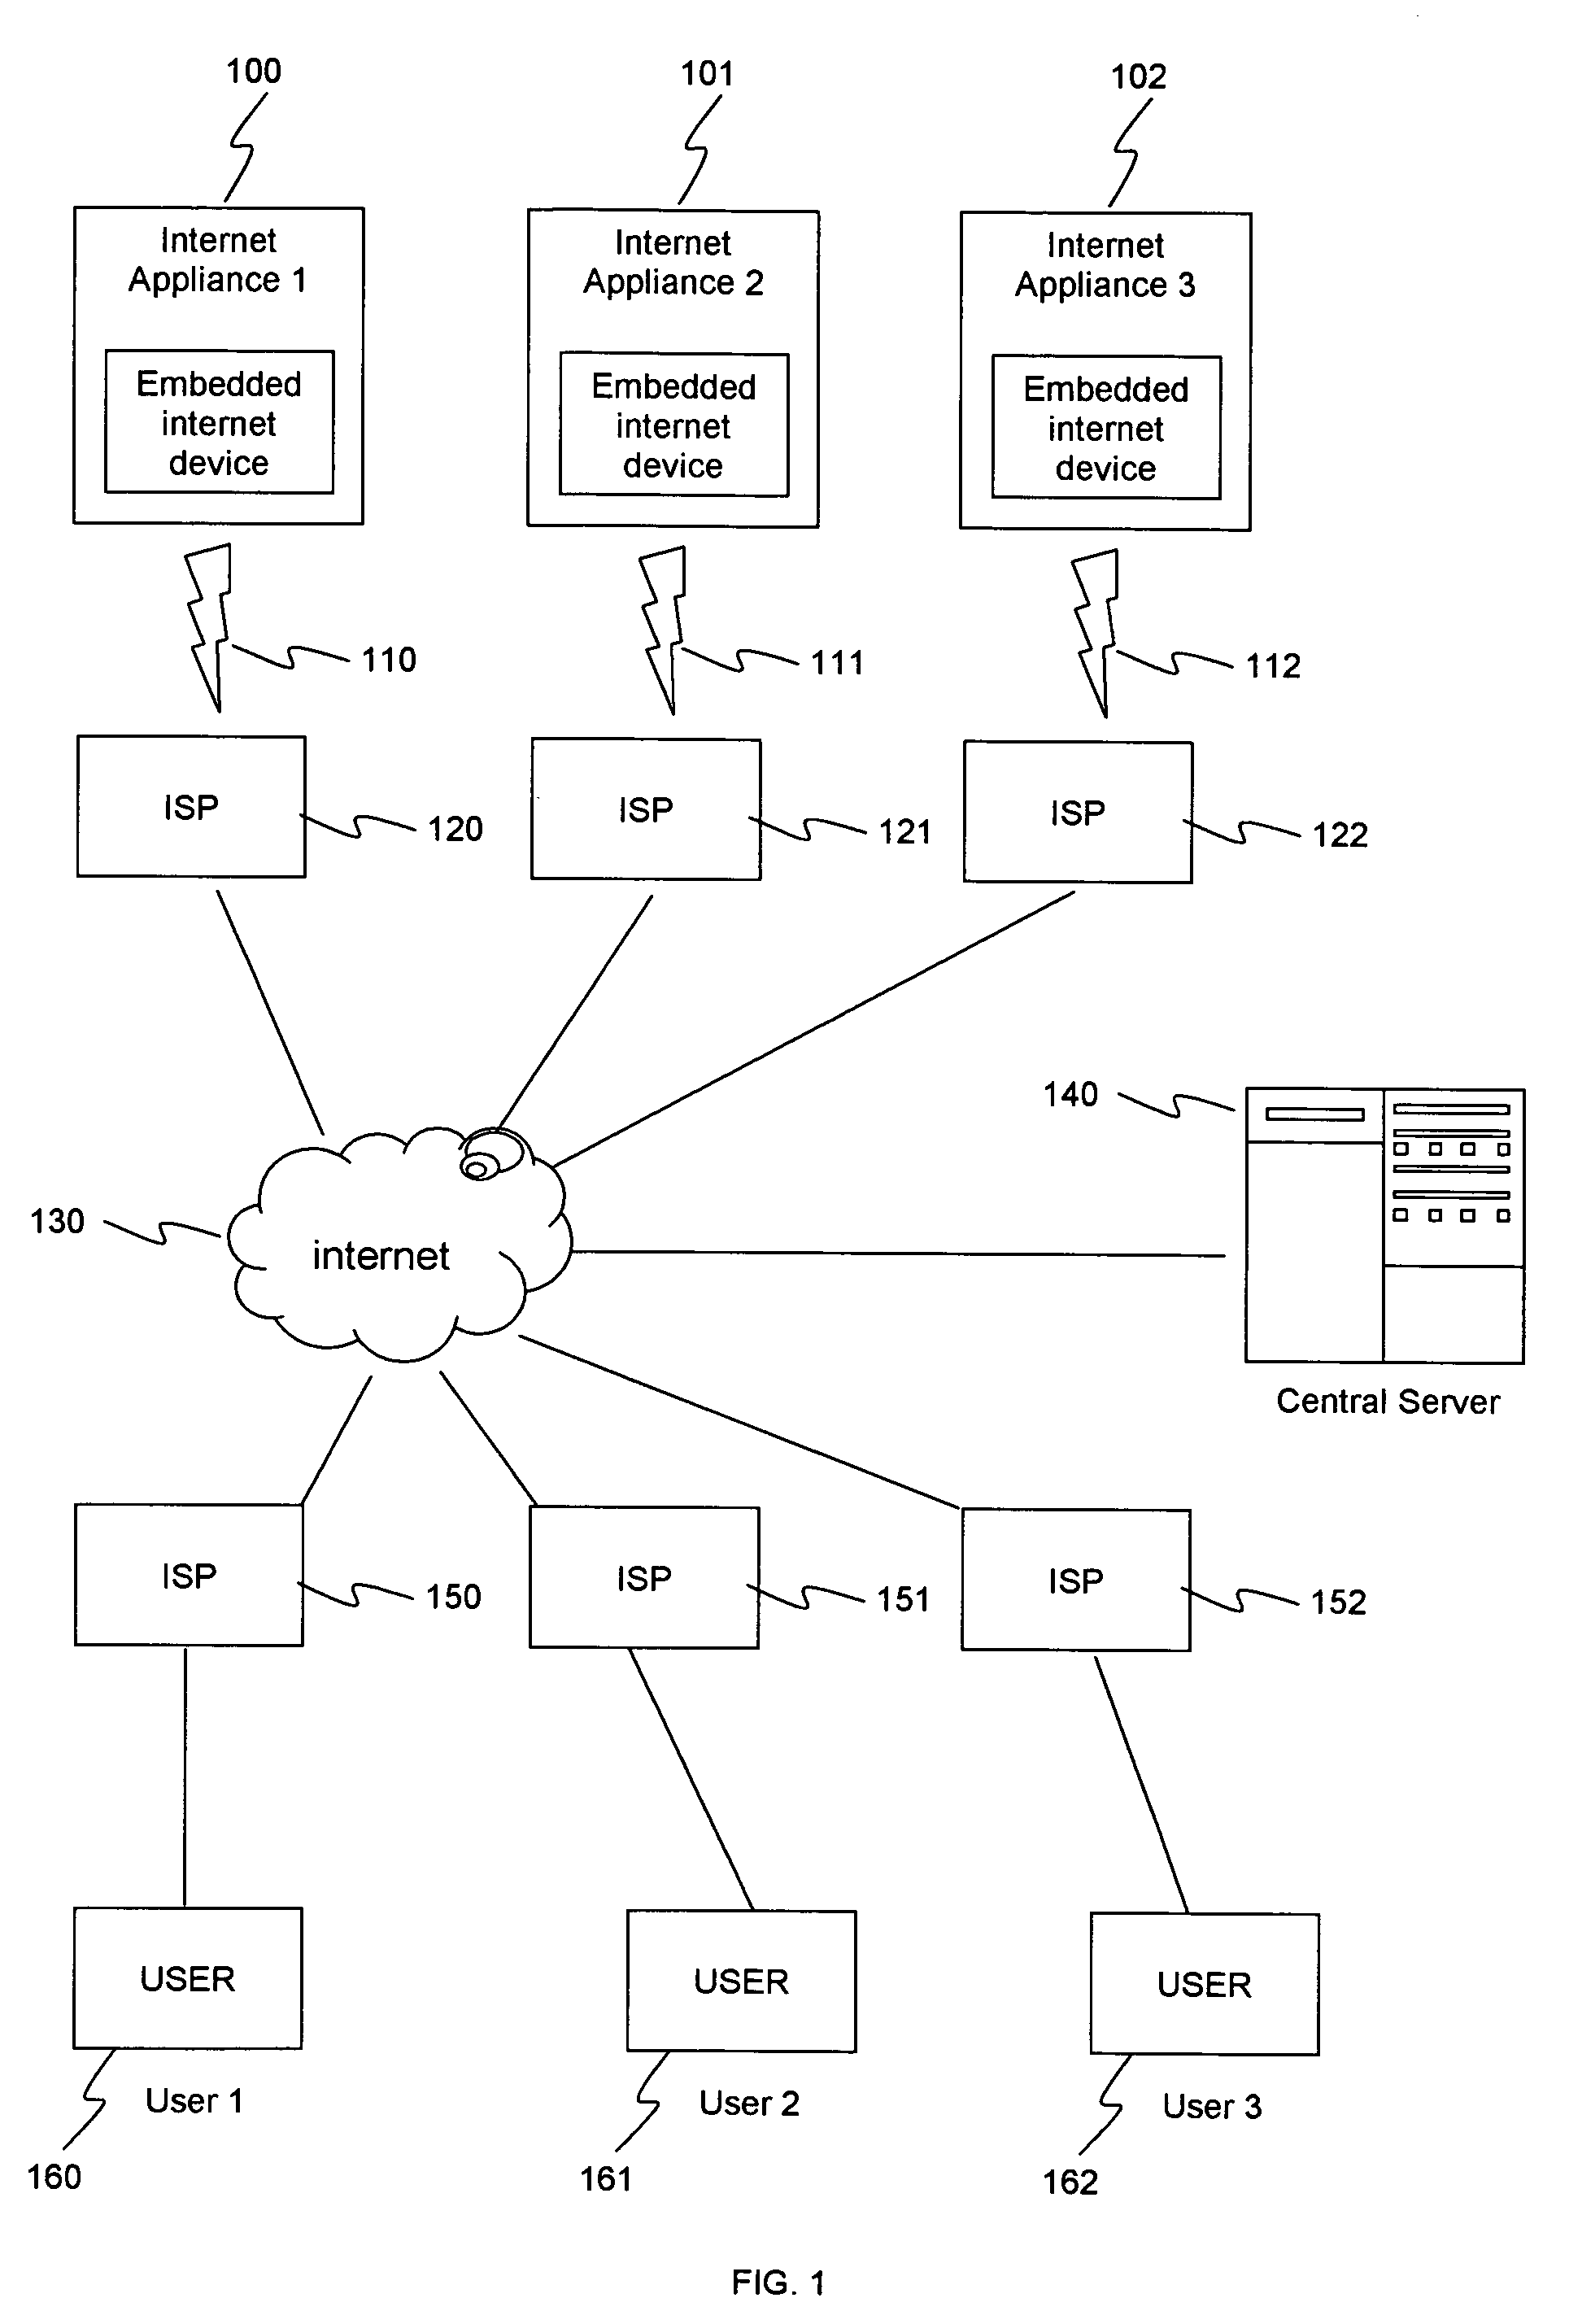 Network architecture for internet appliances